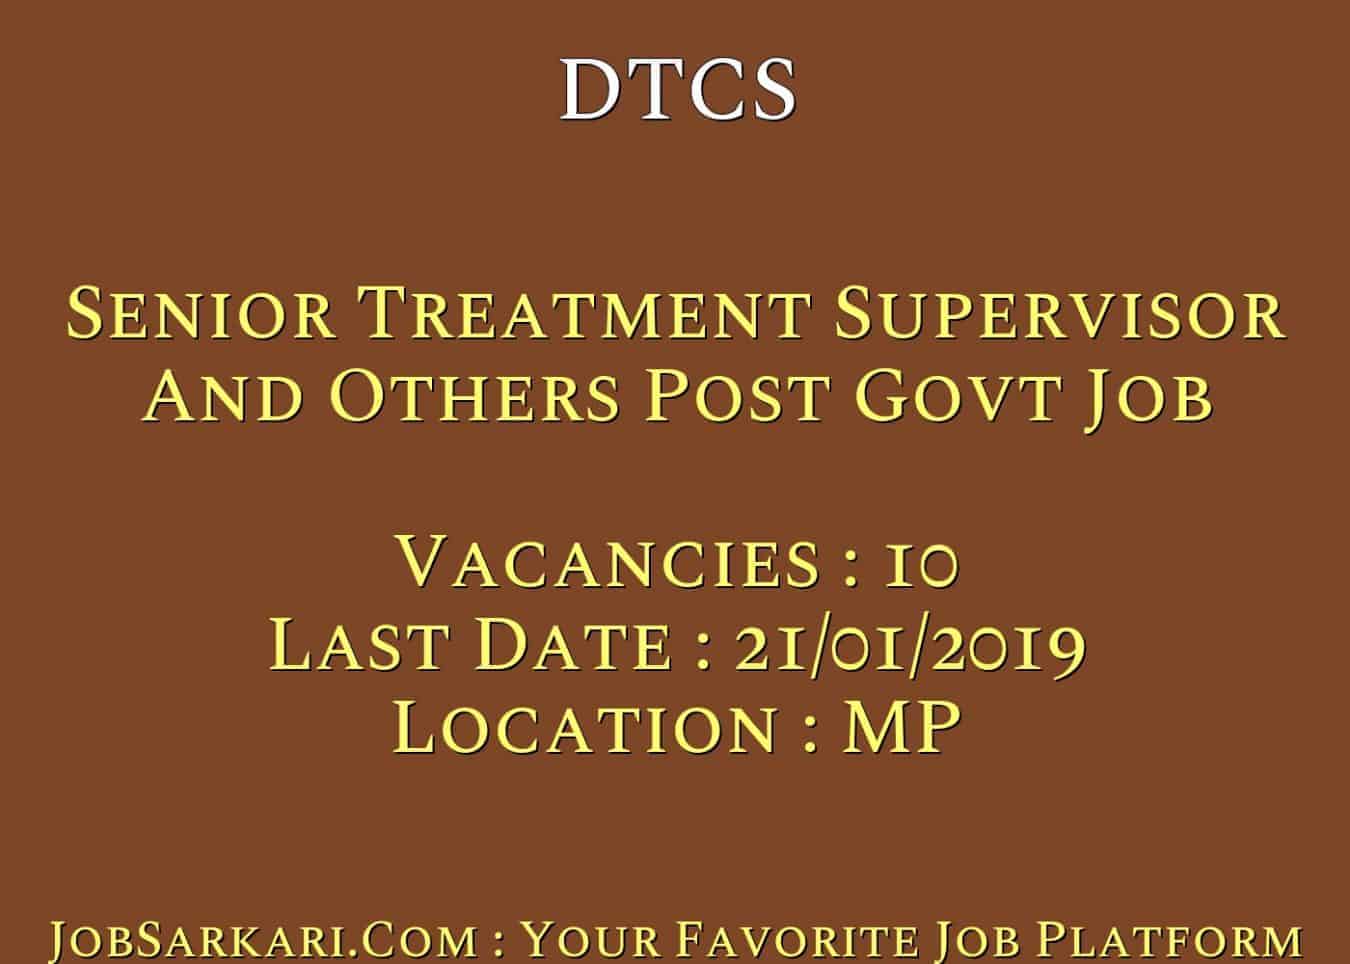 DTCS Recruitment 2019 For Senior Treatment Supervisor And Others Post Govt Job